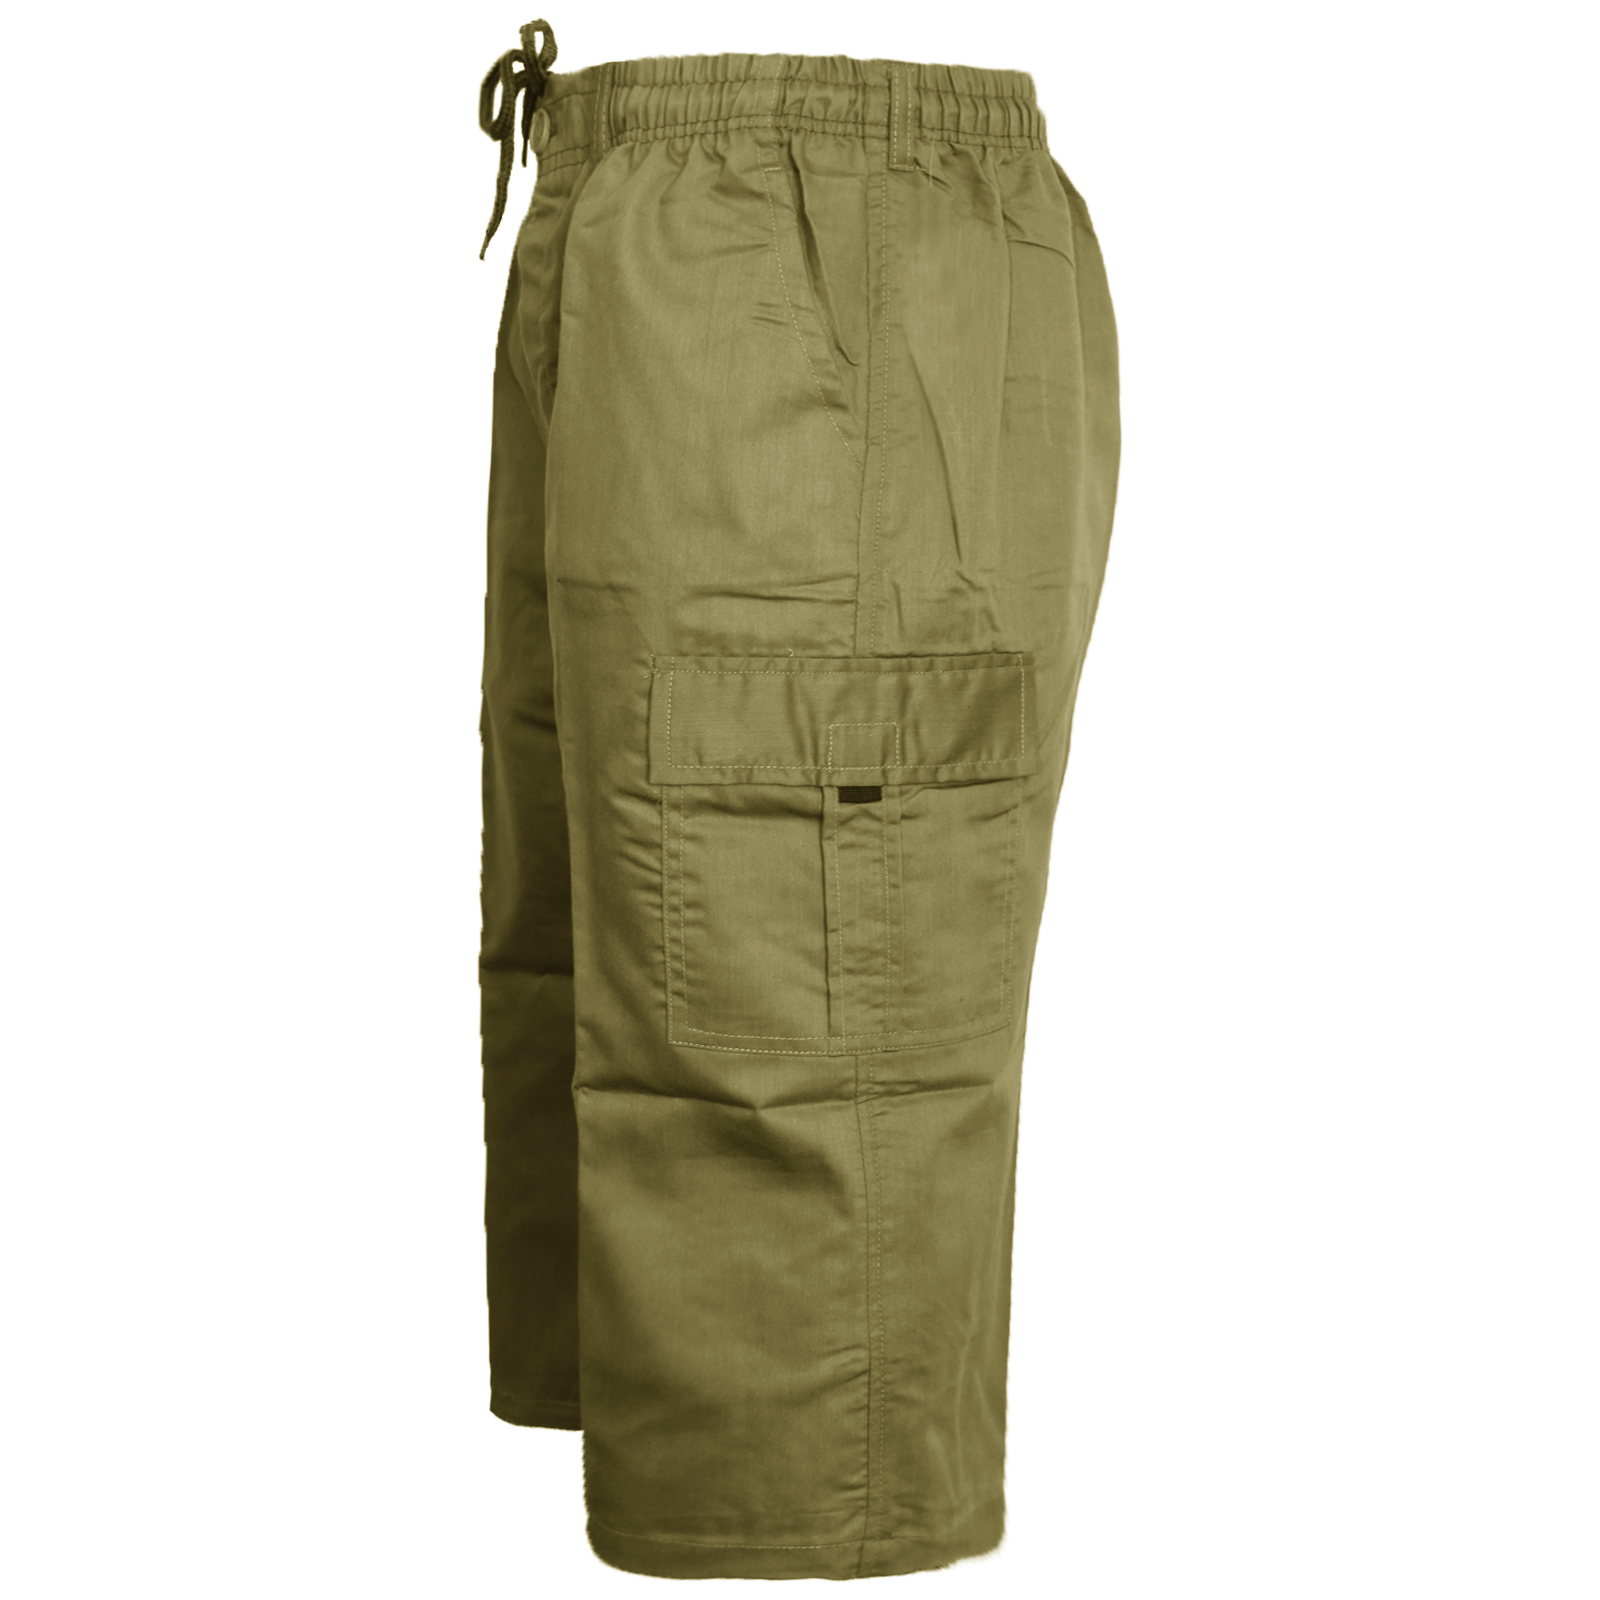 KEFITEVD Men's Casual Twill Elastic 3/4 Cargo Shorts Loose Fit Multi-Pocket Capri Long Short Pants 